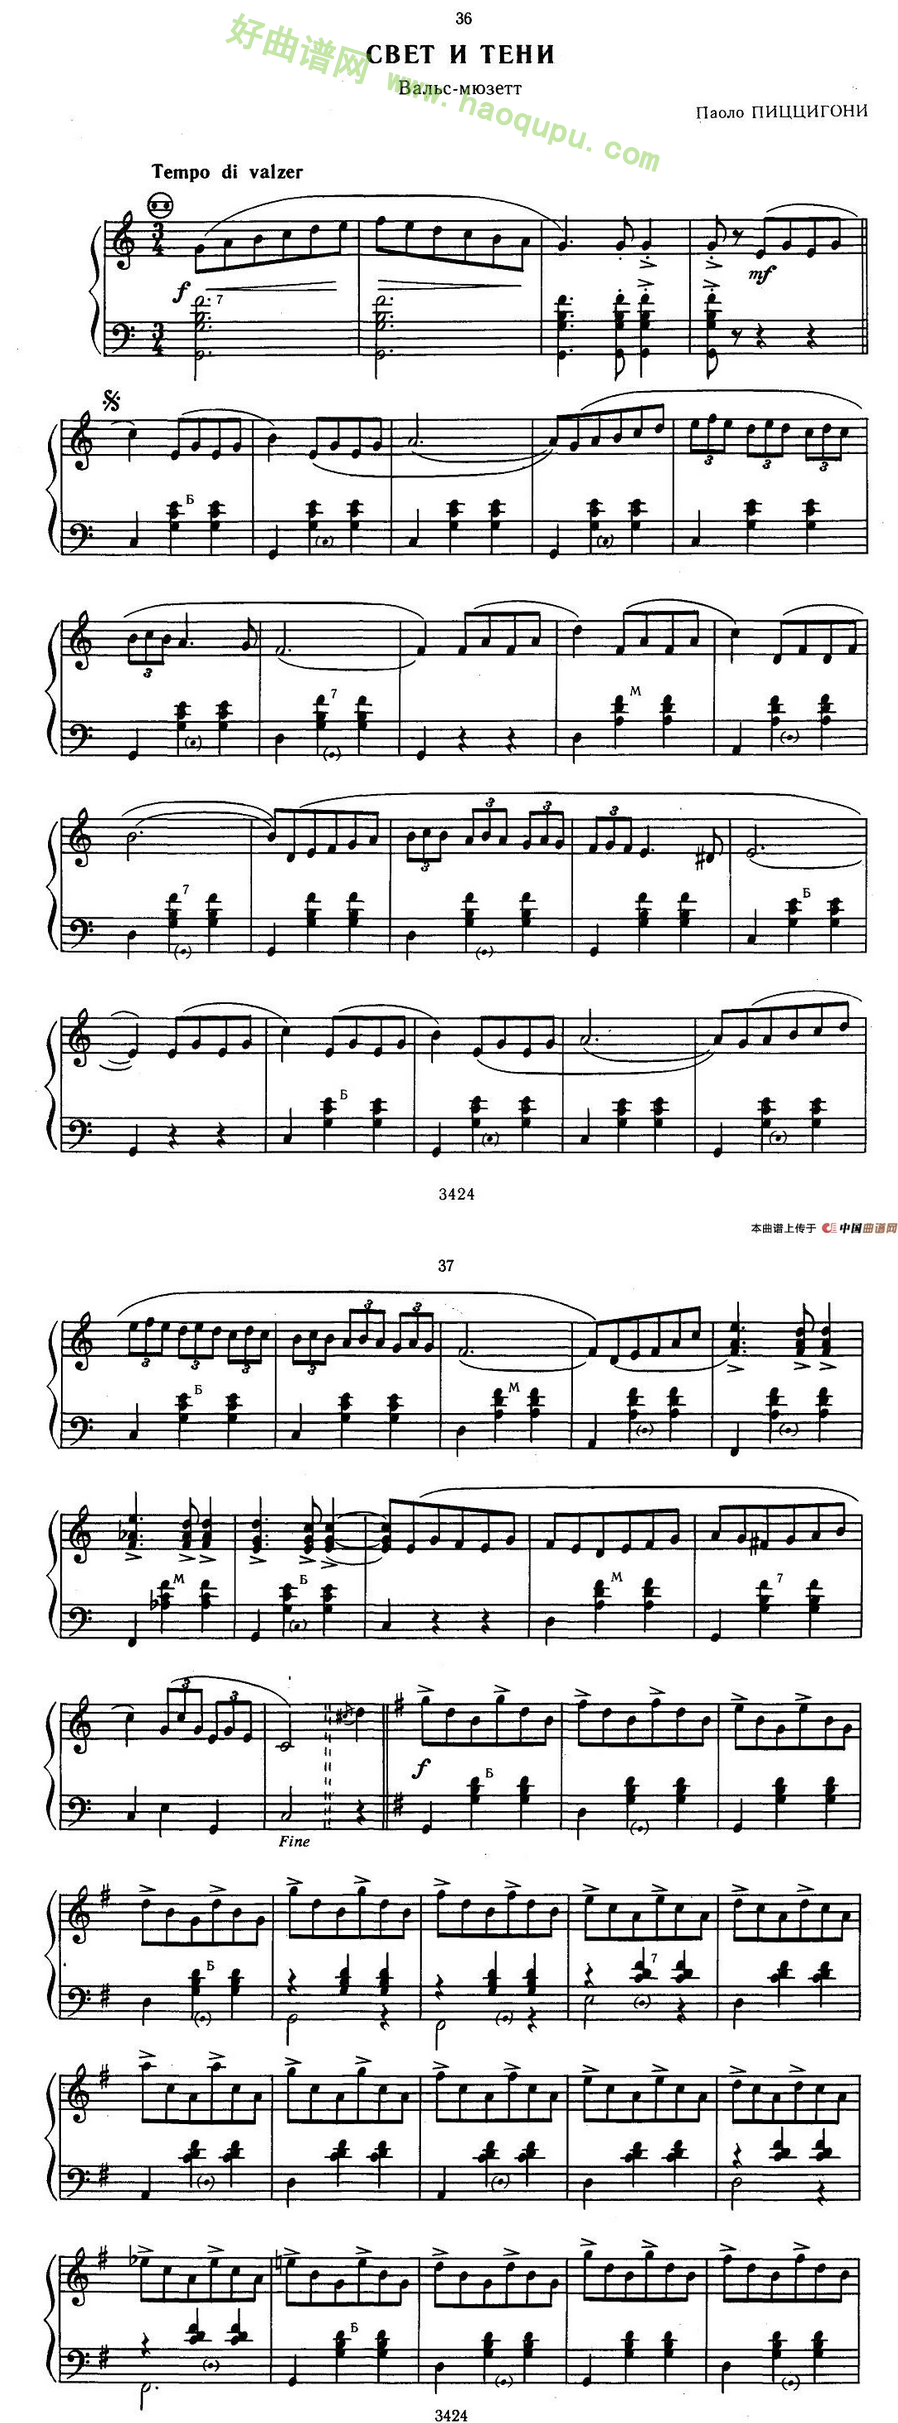 《CBET N TENN》（光与影）手风琴曲谱第1张